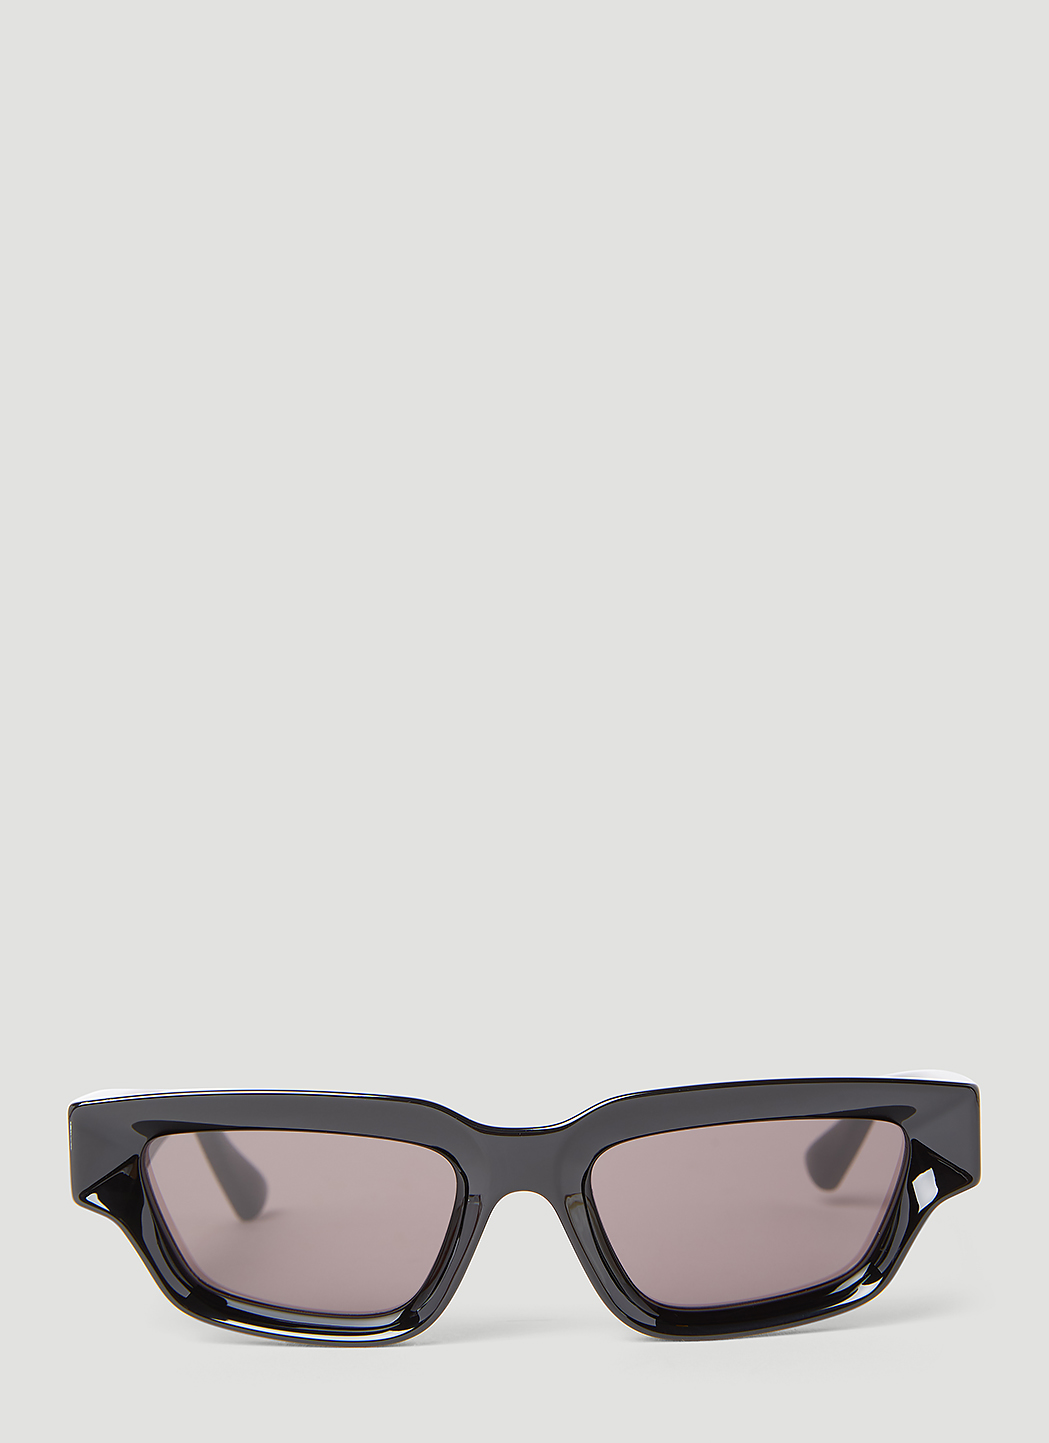 Bottega Veneta Men's Sharp Square Sunglasses in Black | LN-CC®